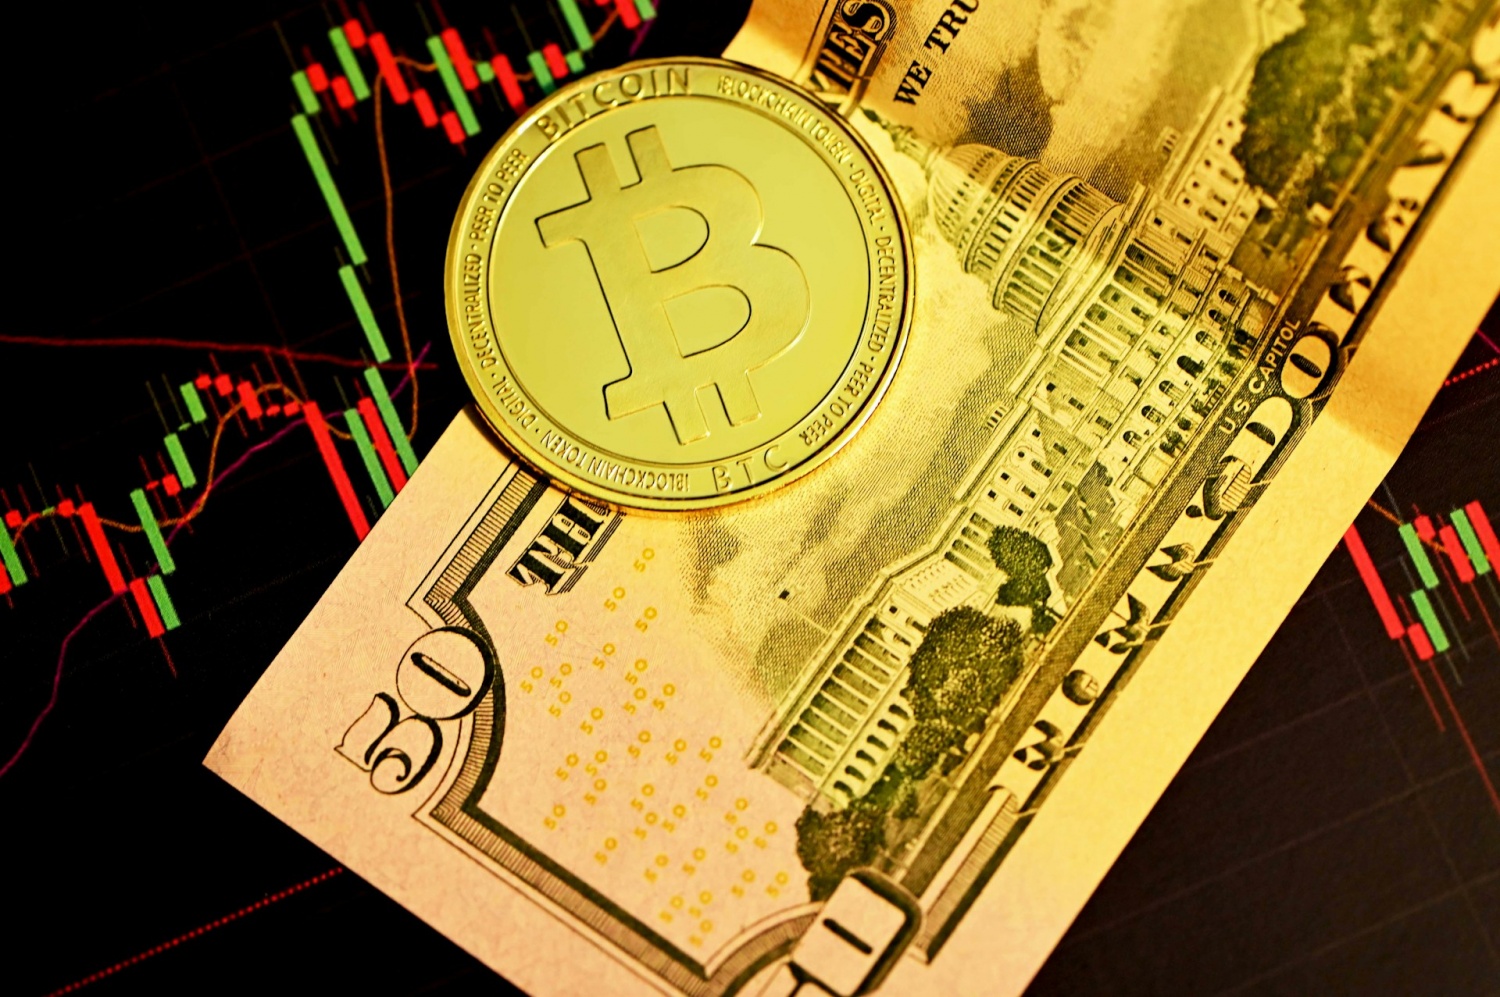 A single Bitcoin on top of $50 dollars cash